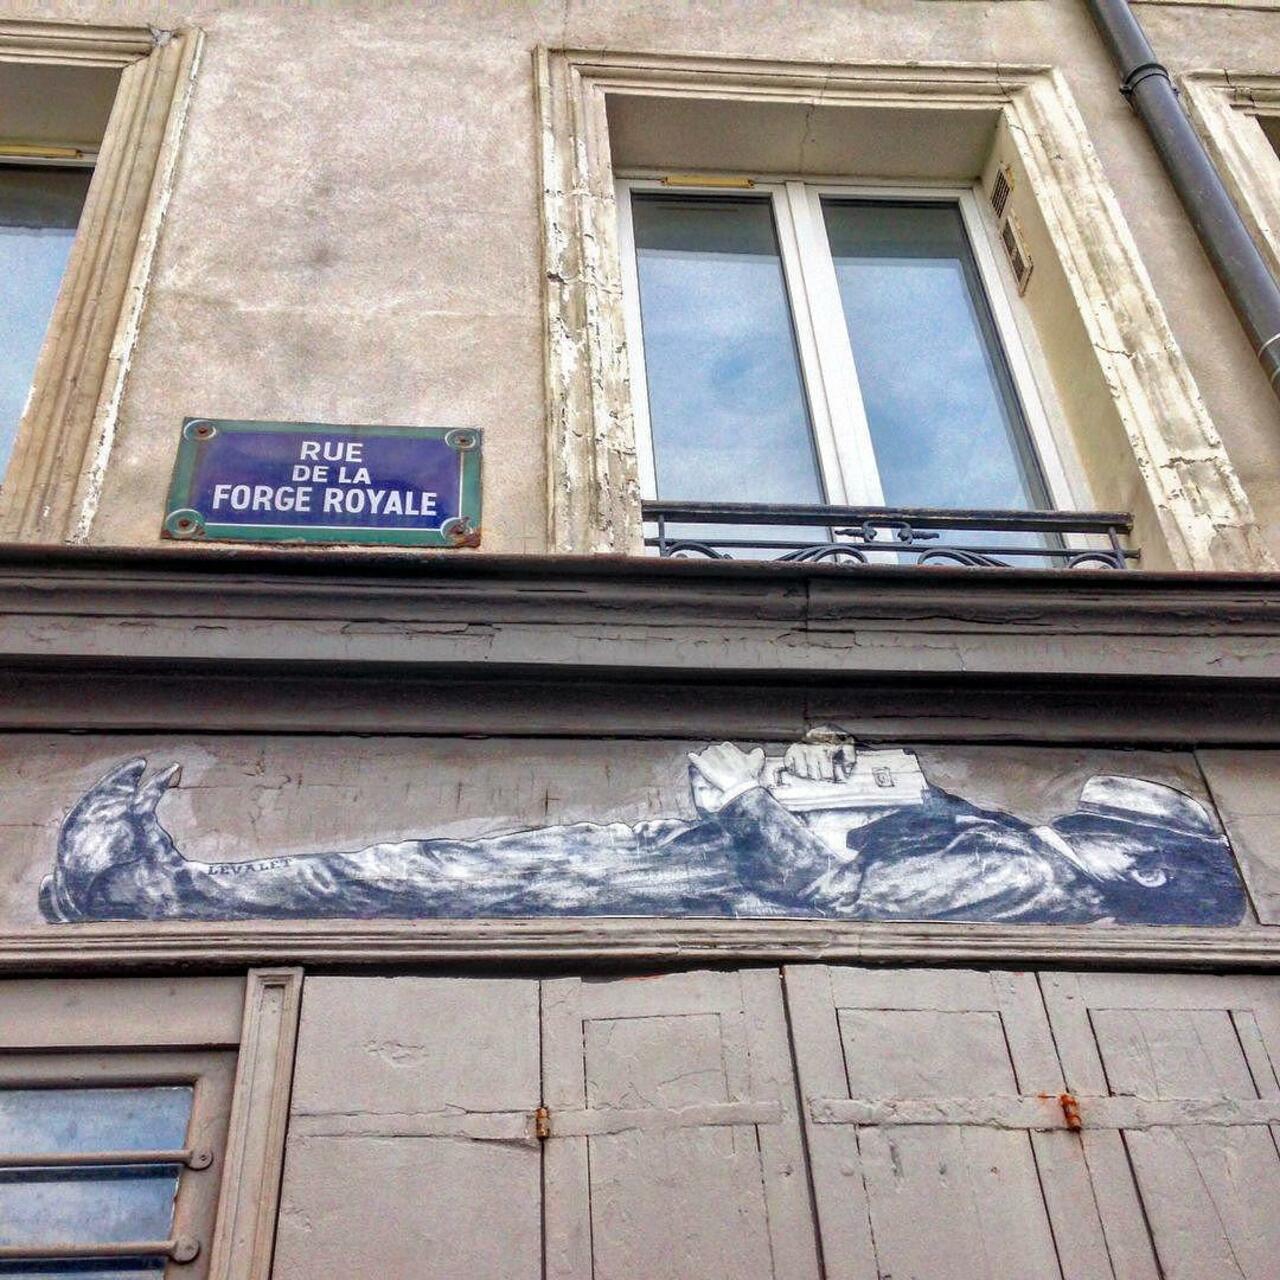 #Paris #graffiti photo by @joecoolpix http://ift.tt/1G6T4ta #StreetArt http://t.co/NuTFHMdm2E